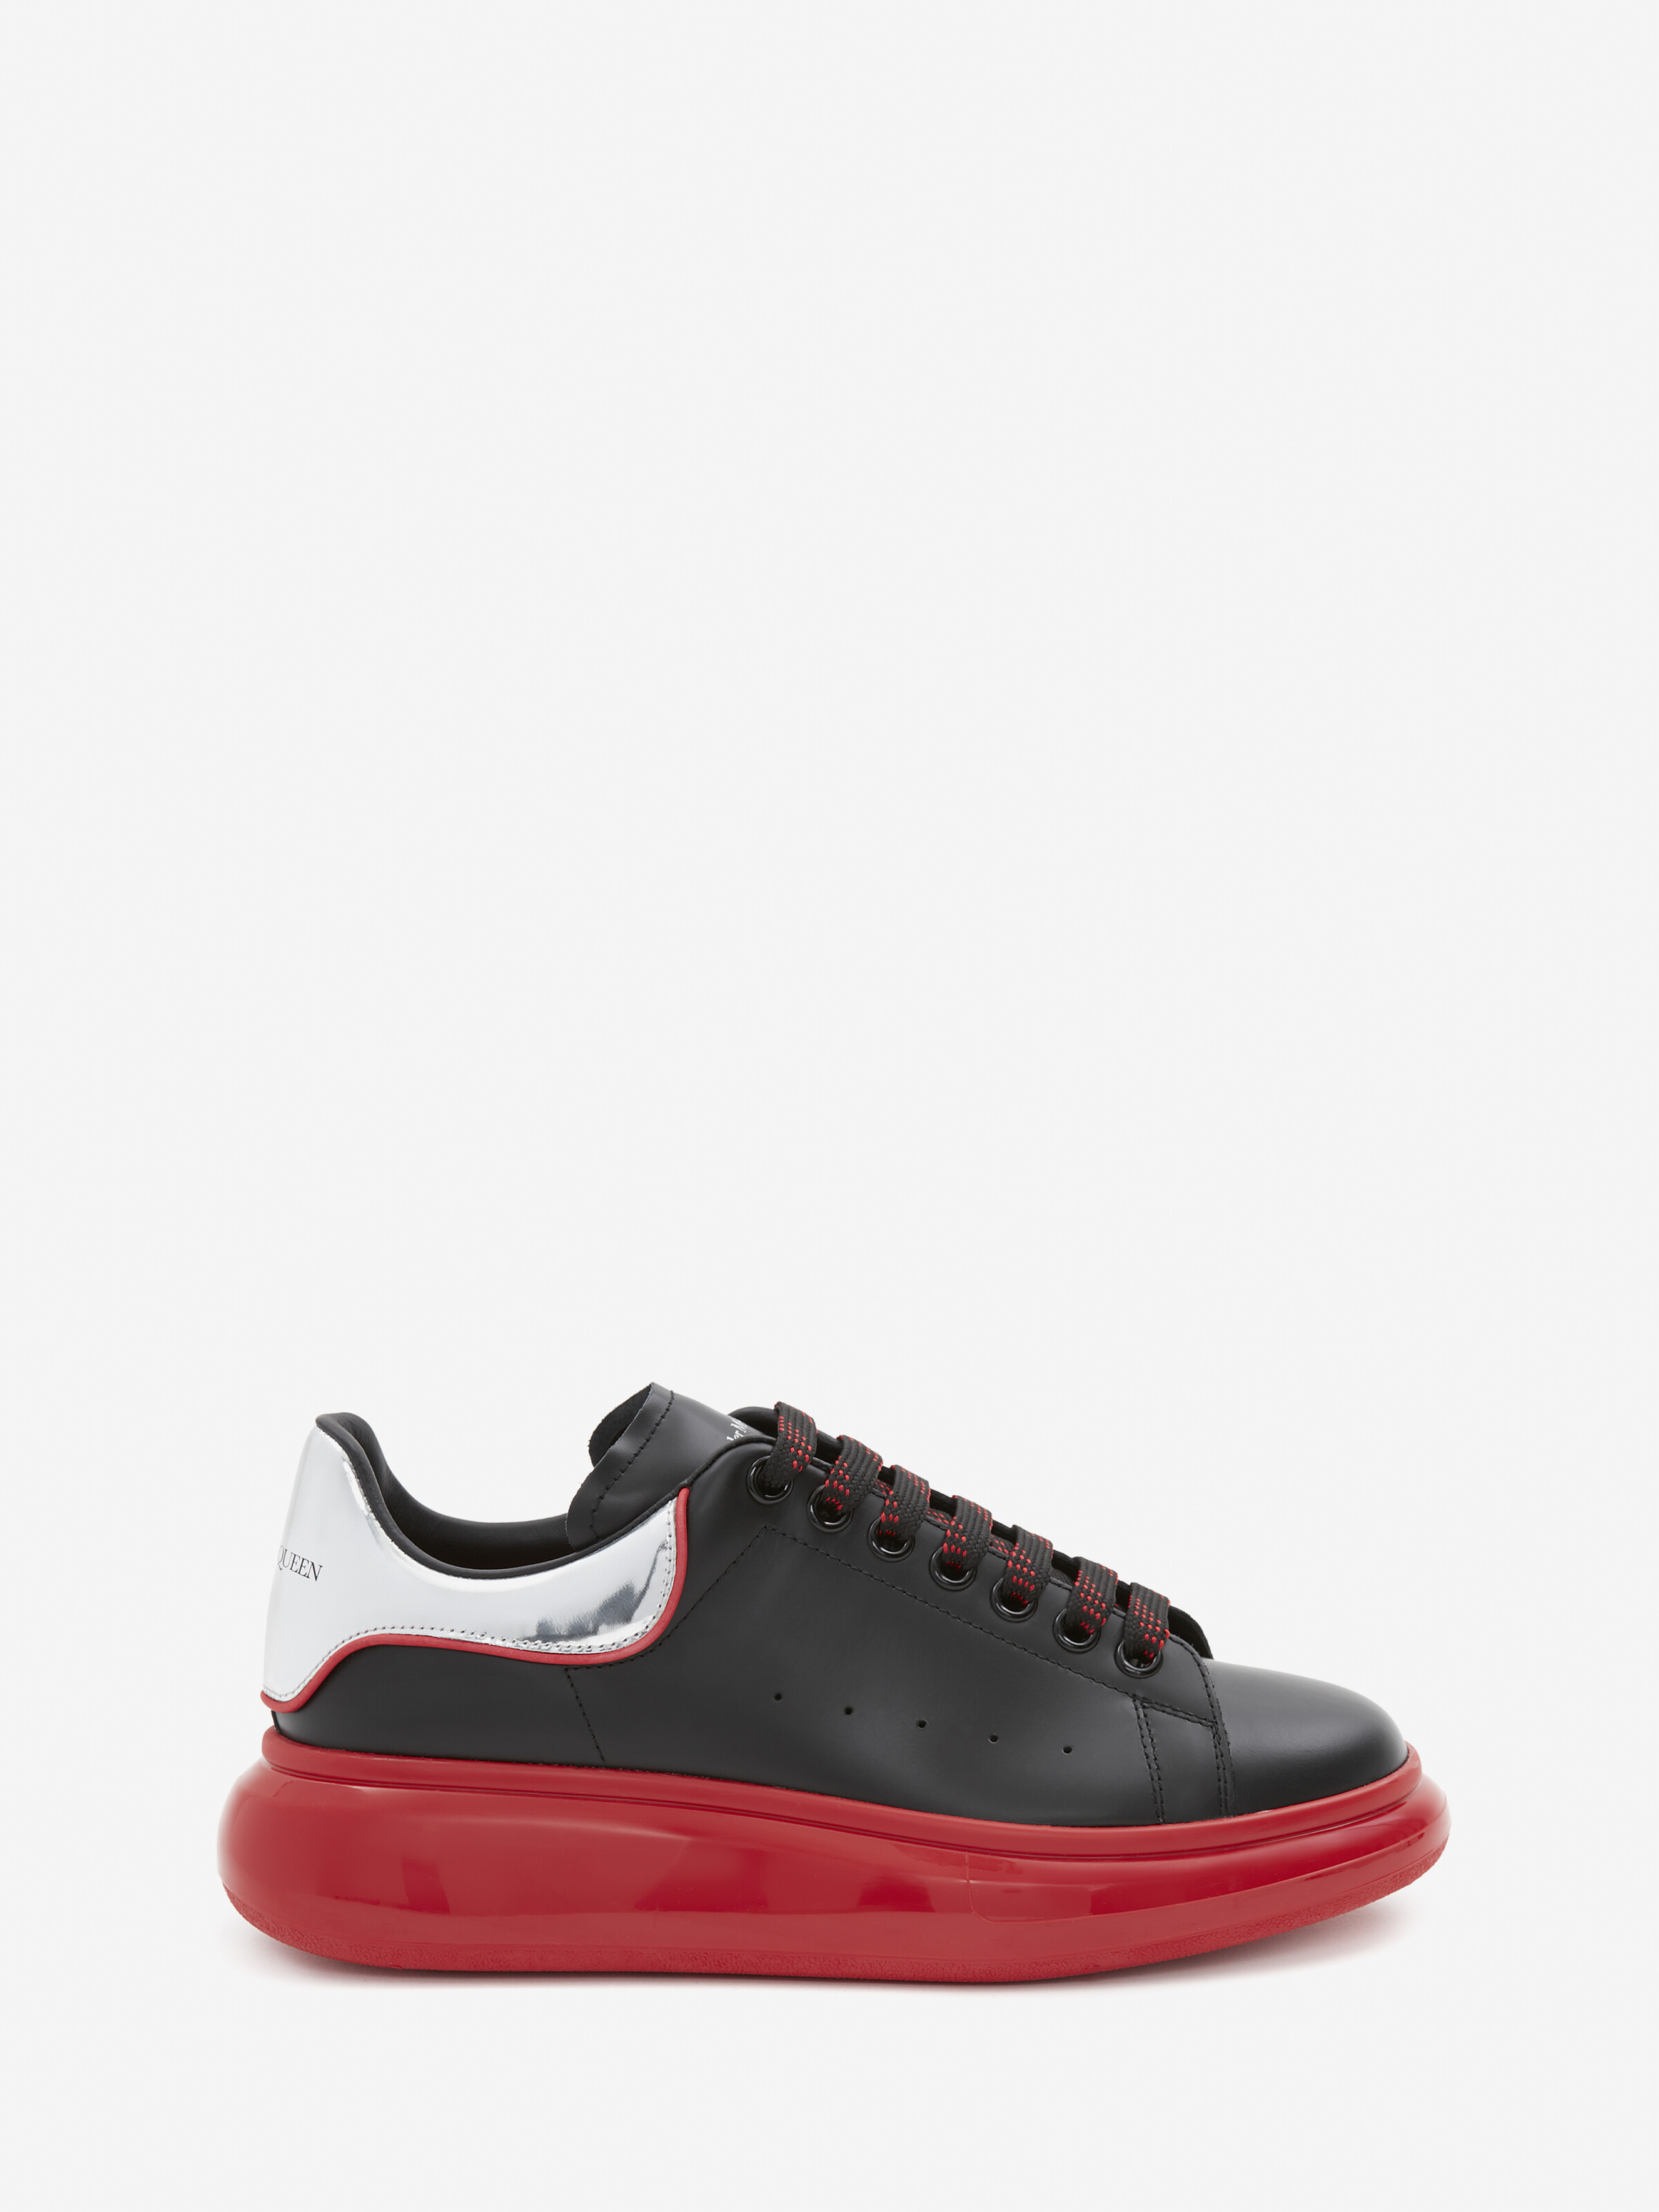 Alexander Mcqueen Flat Shoes Red